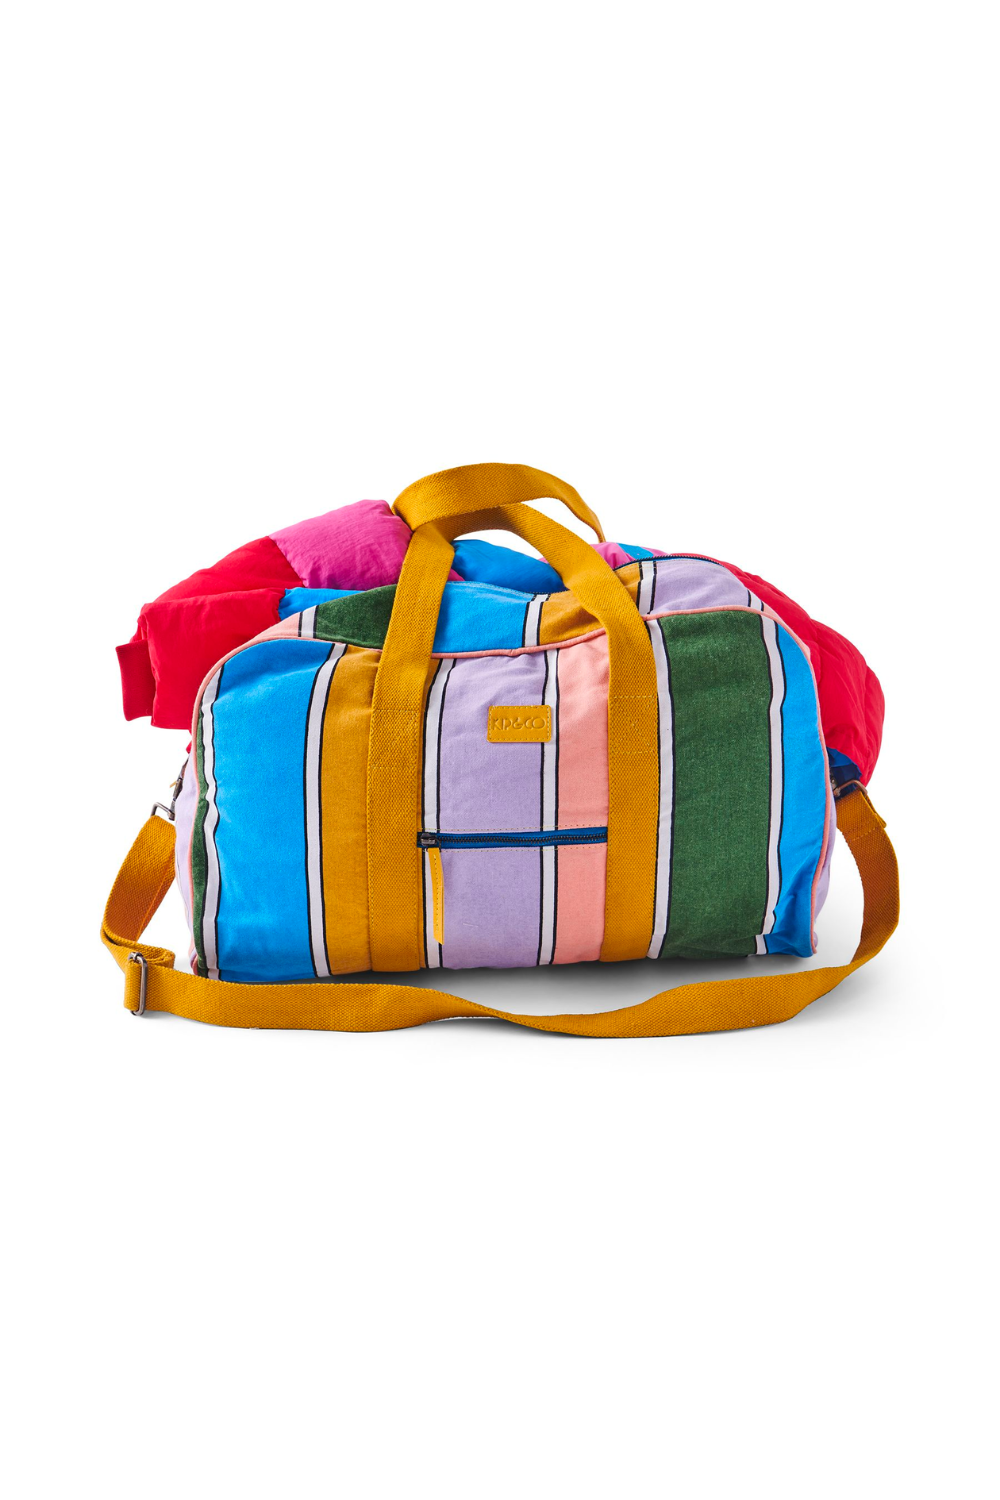 Majorca Stripe Duffle Bag One Size